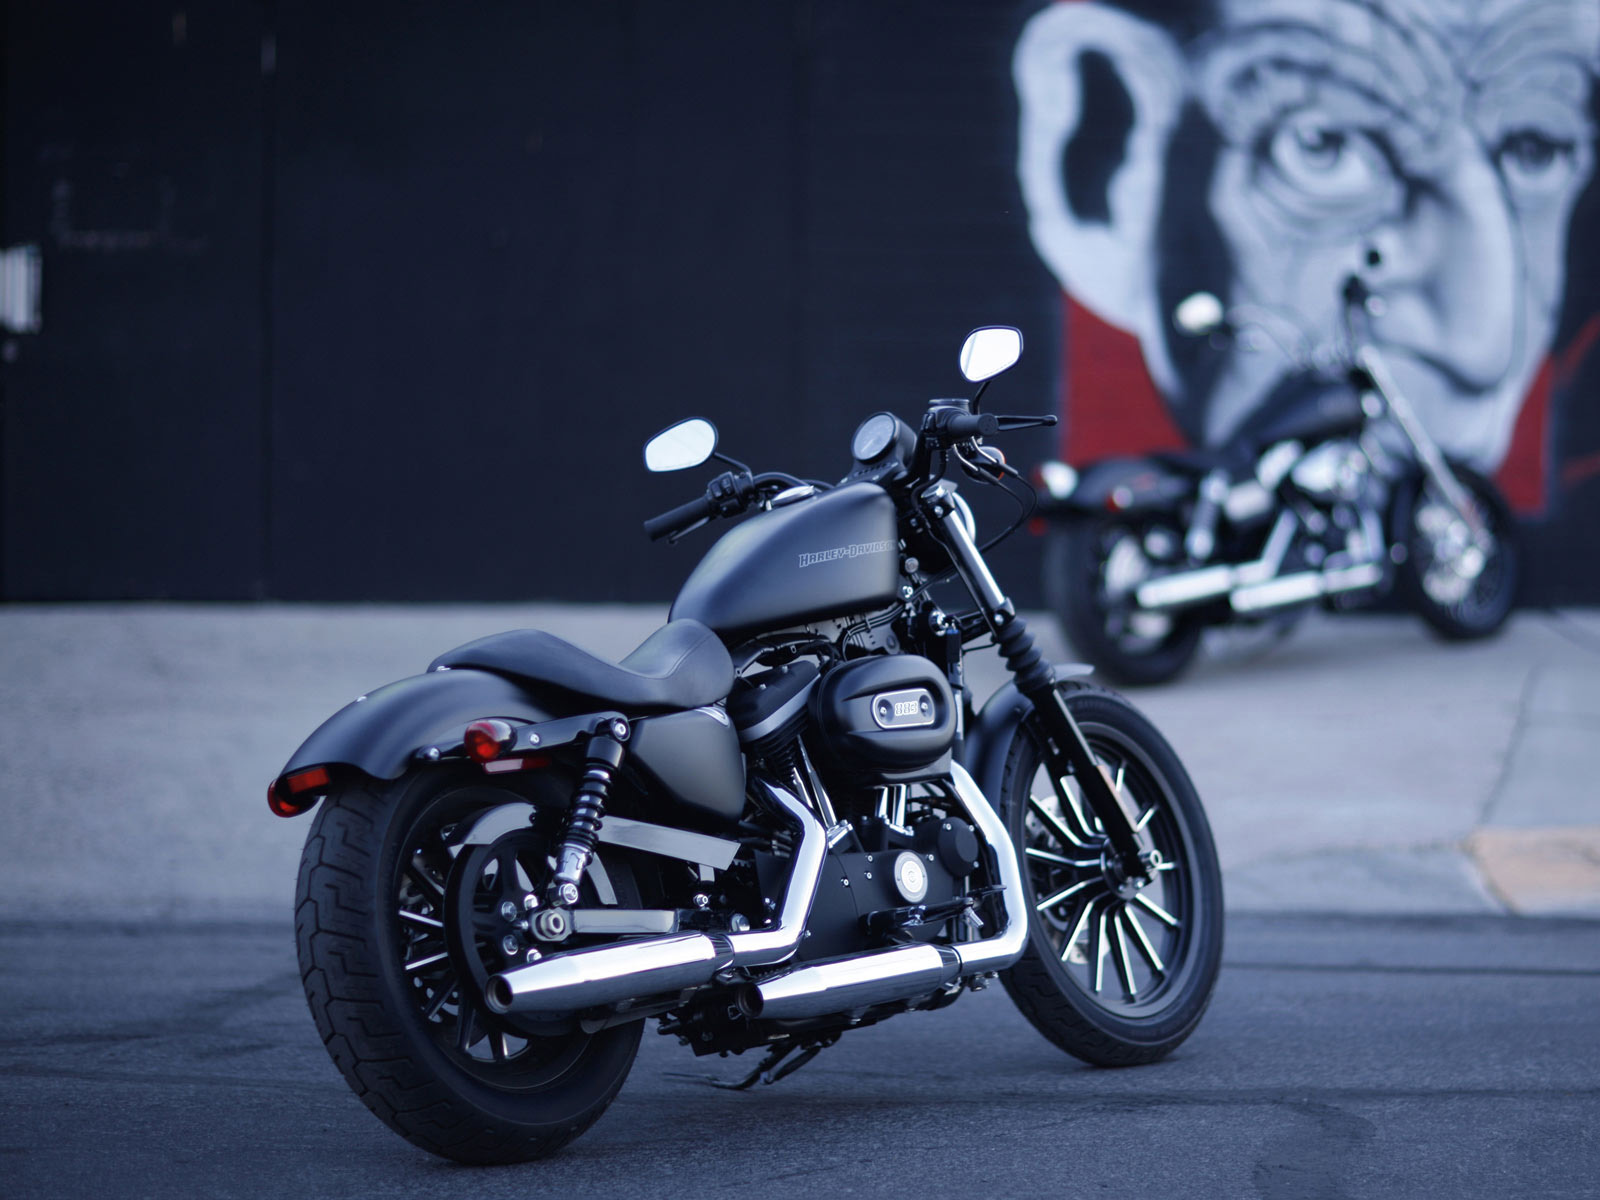 Harley Davidson Bike Image Best HD Wallpaper Puter